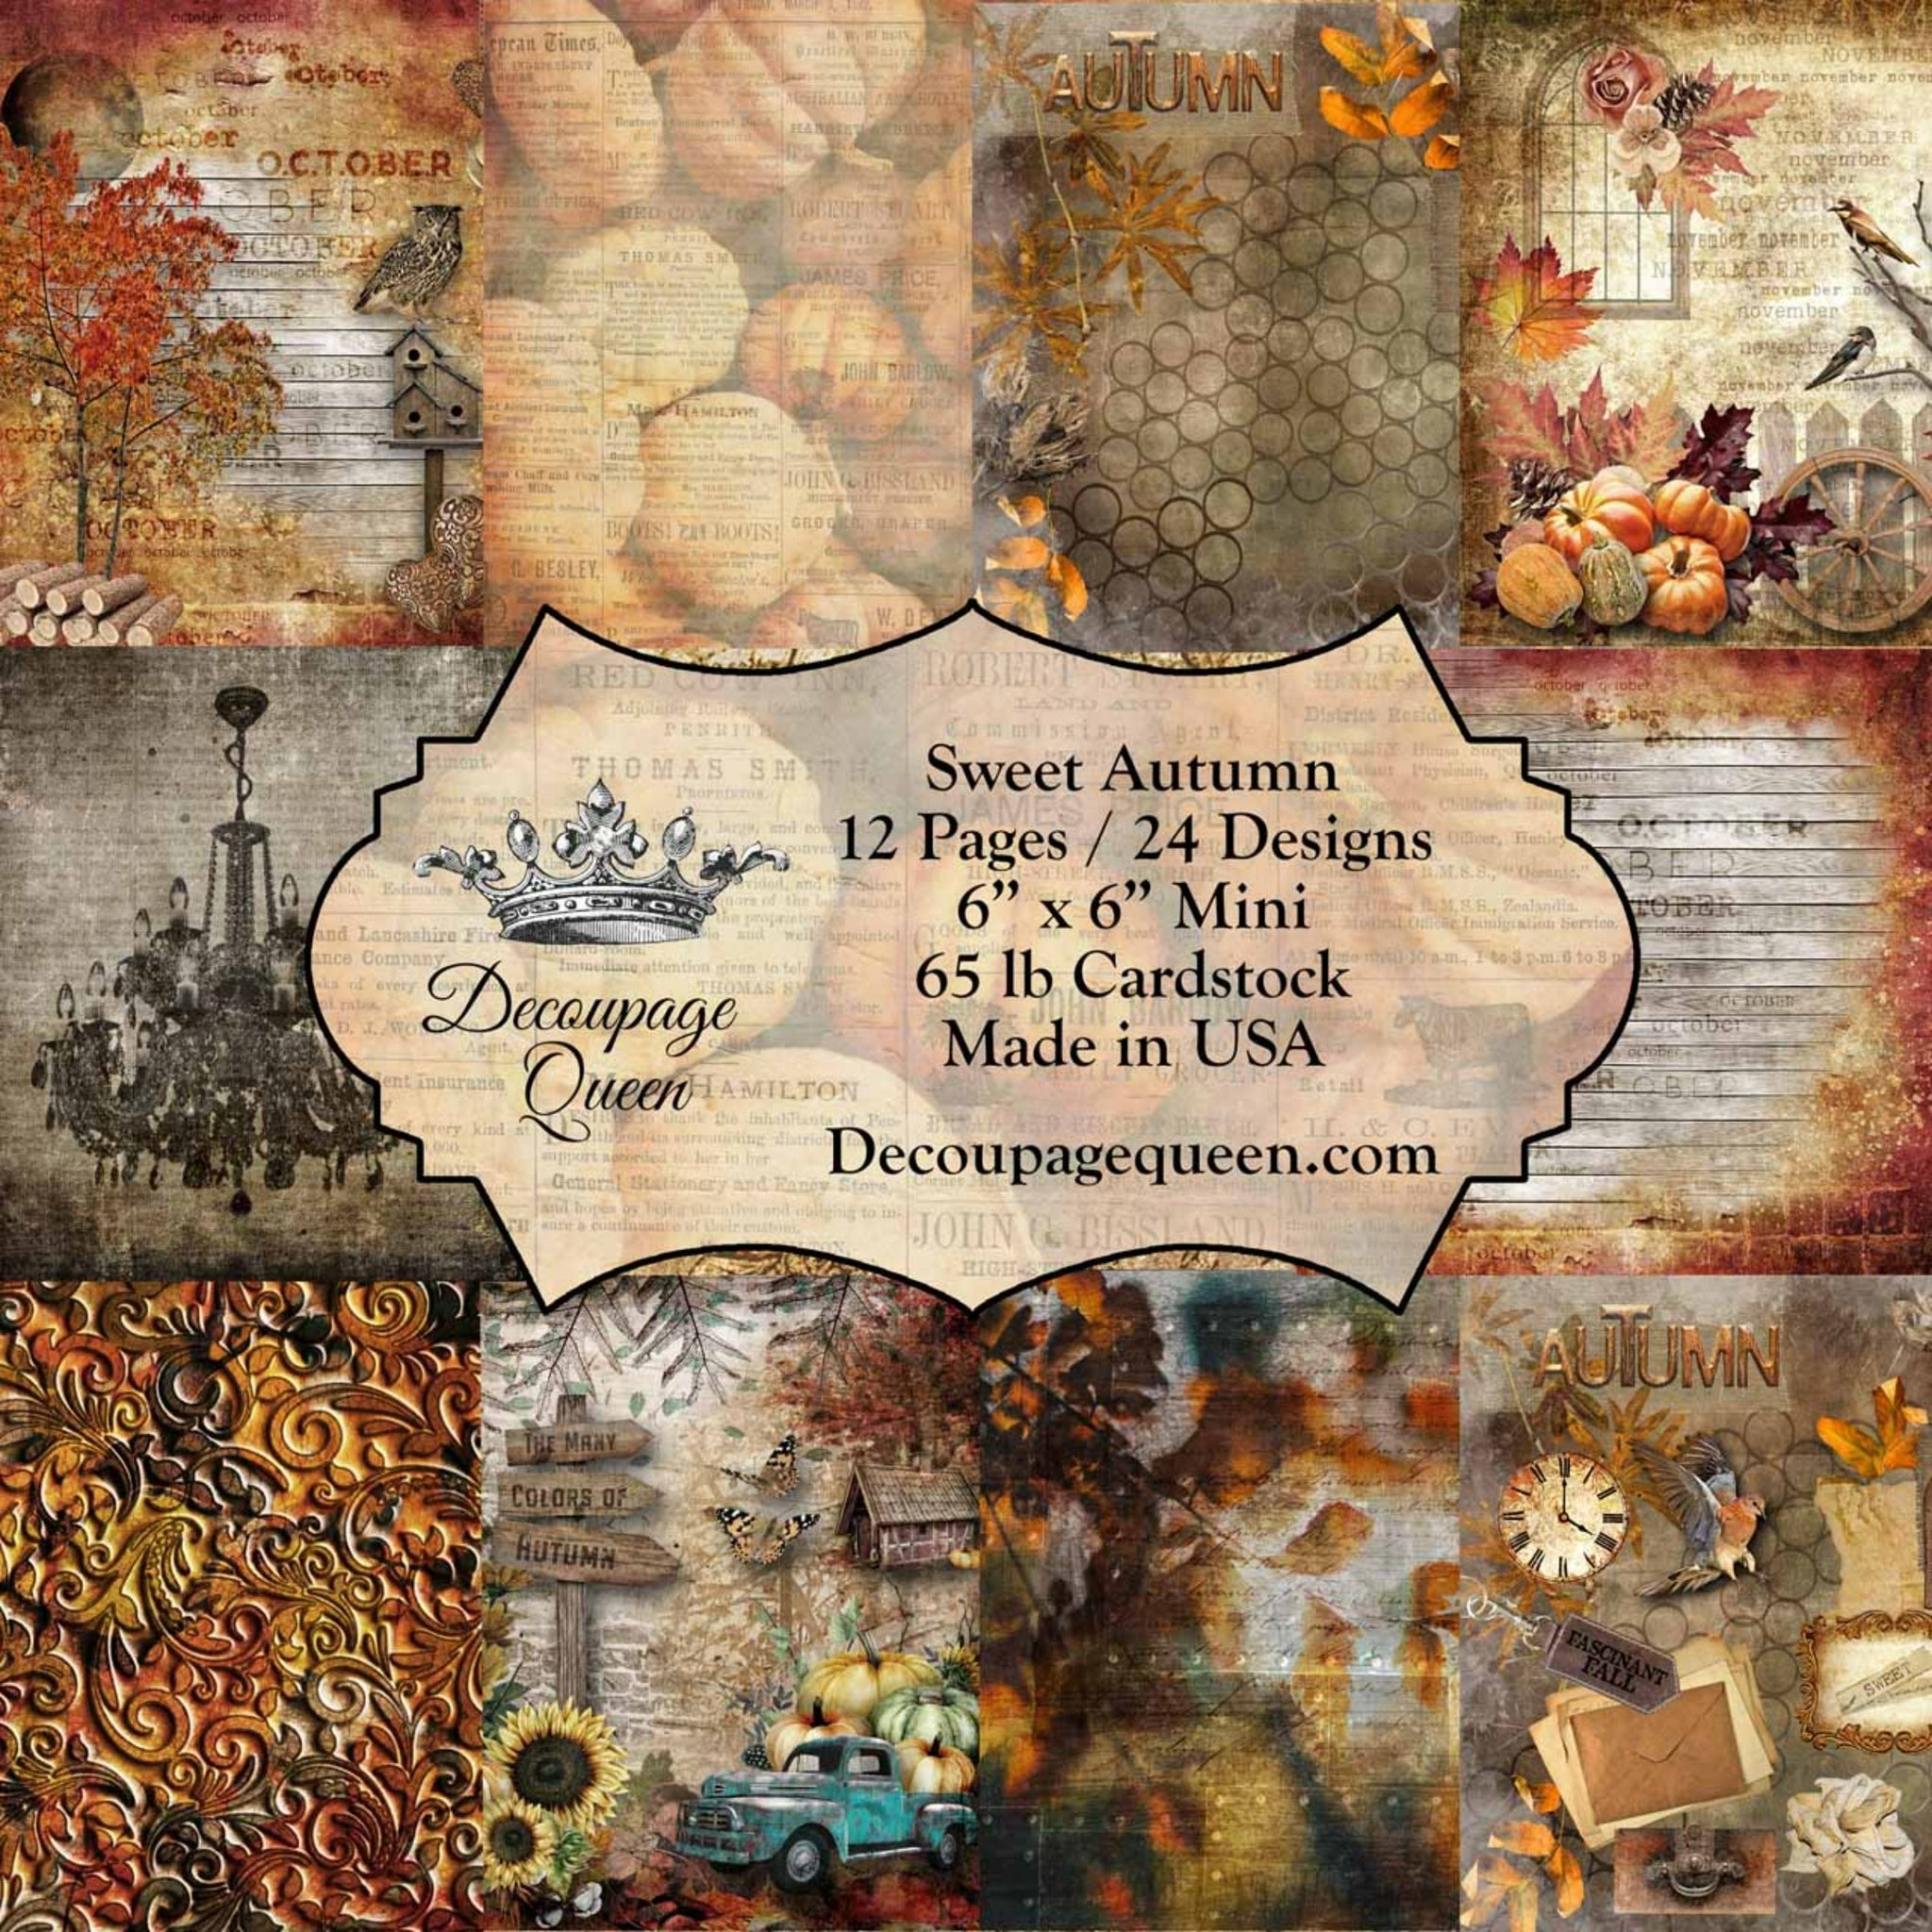 Stampin D'Amour: Free Digital Scrapbook Paper - Brown Victorian